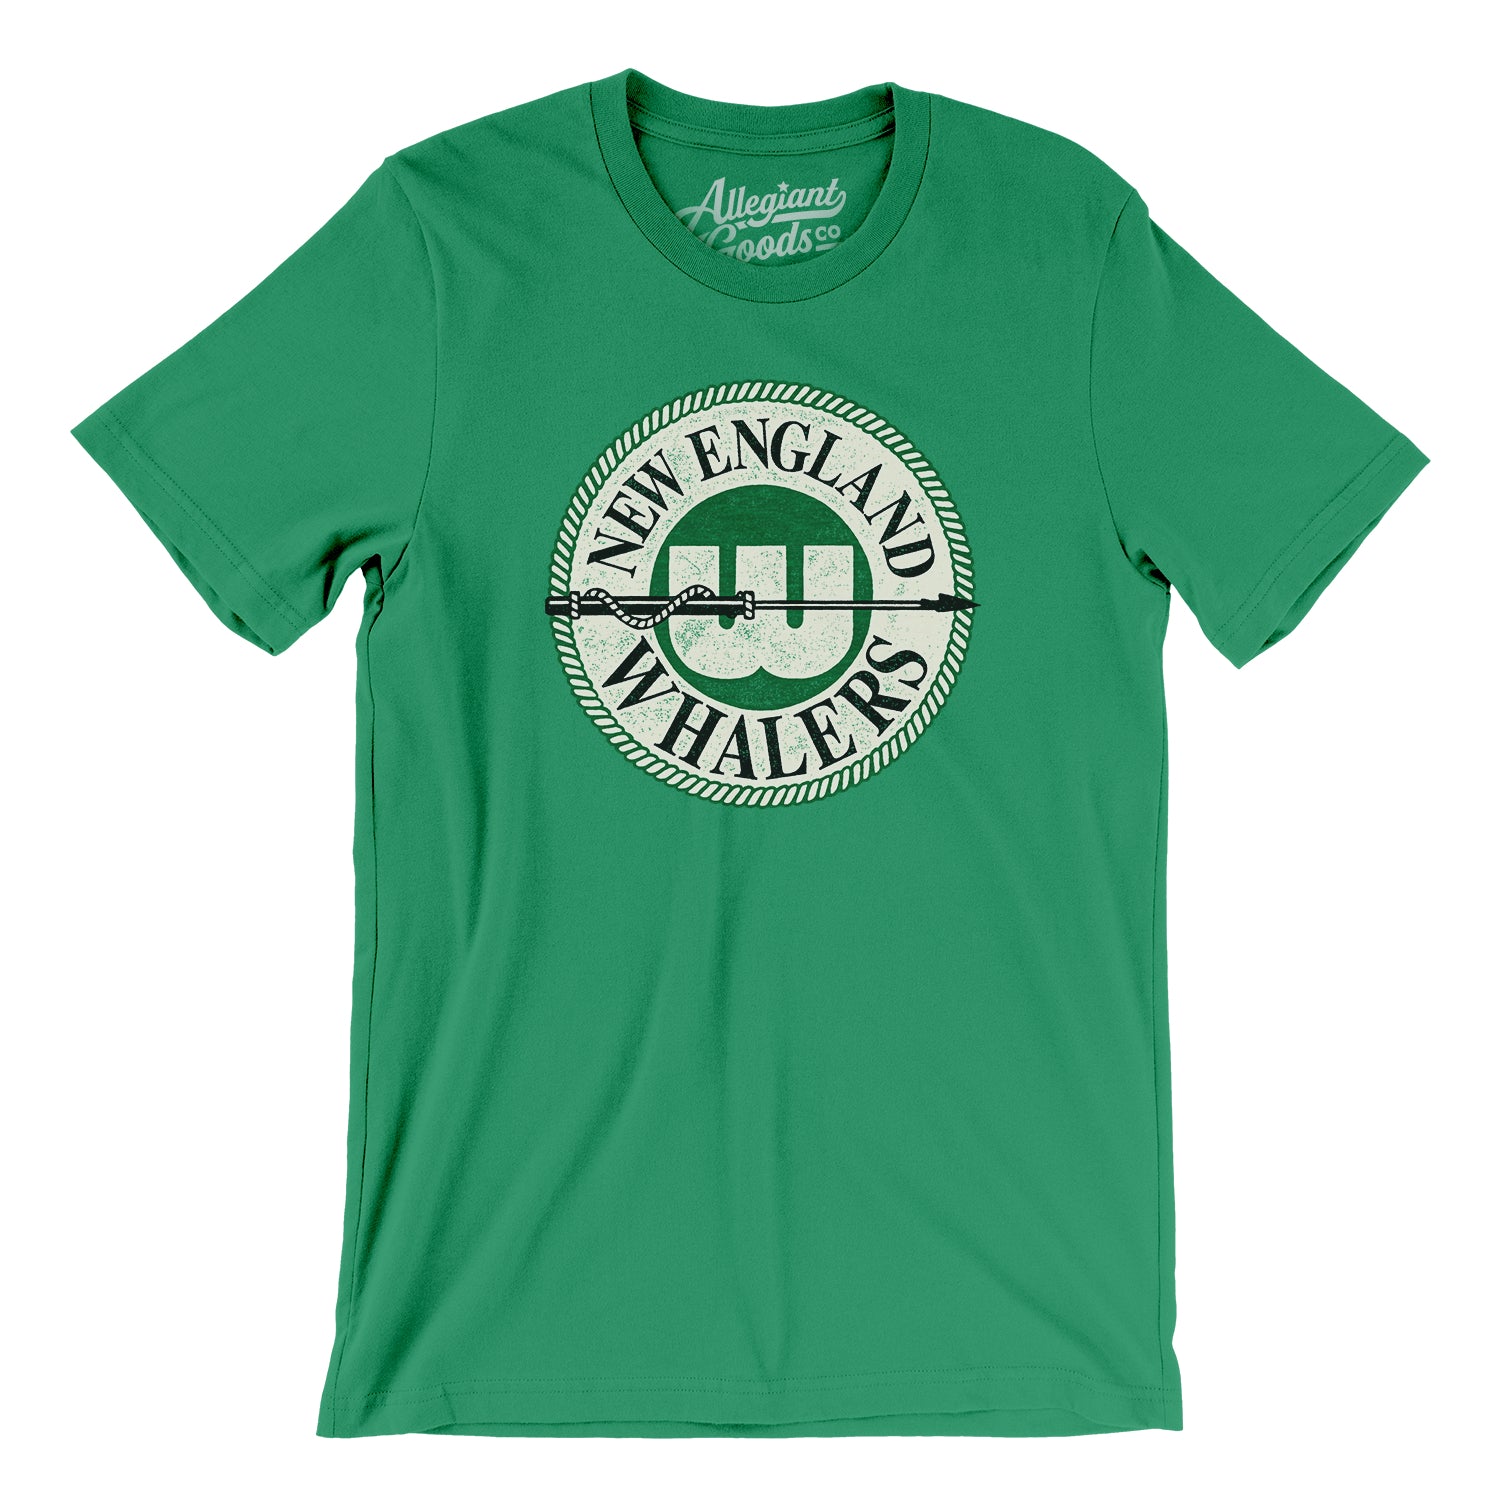 Hartford Whalers T-Shirt Anime t-shirt tees graphic t shirts mens